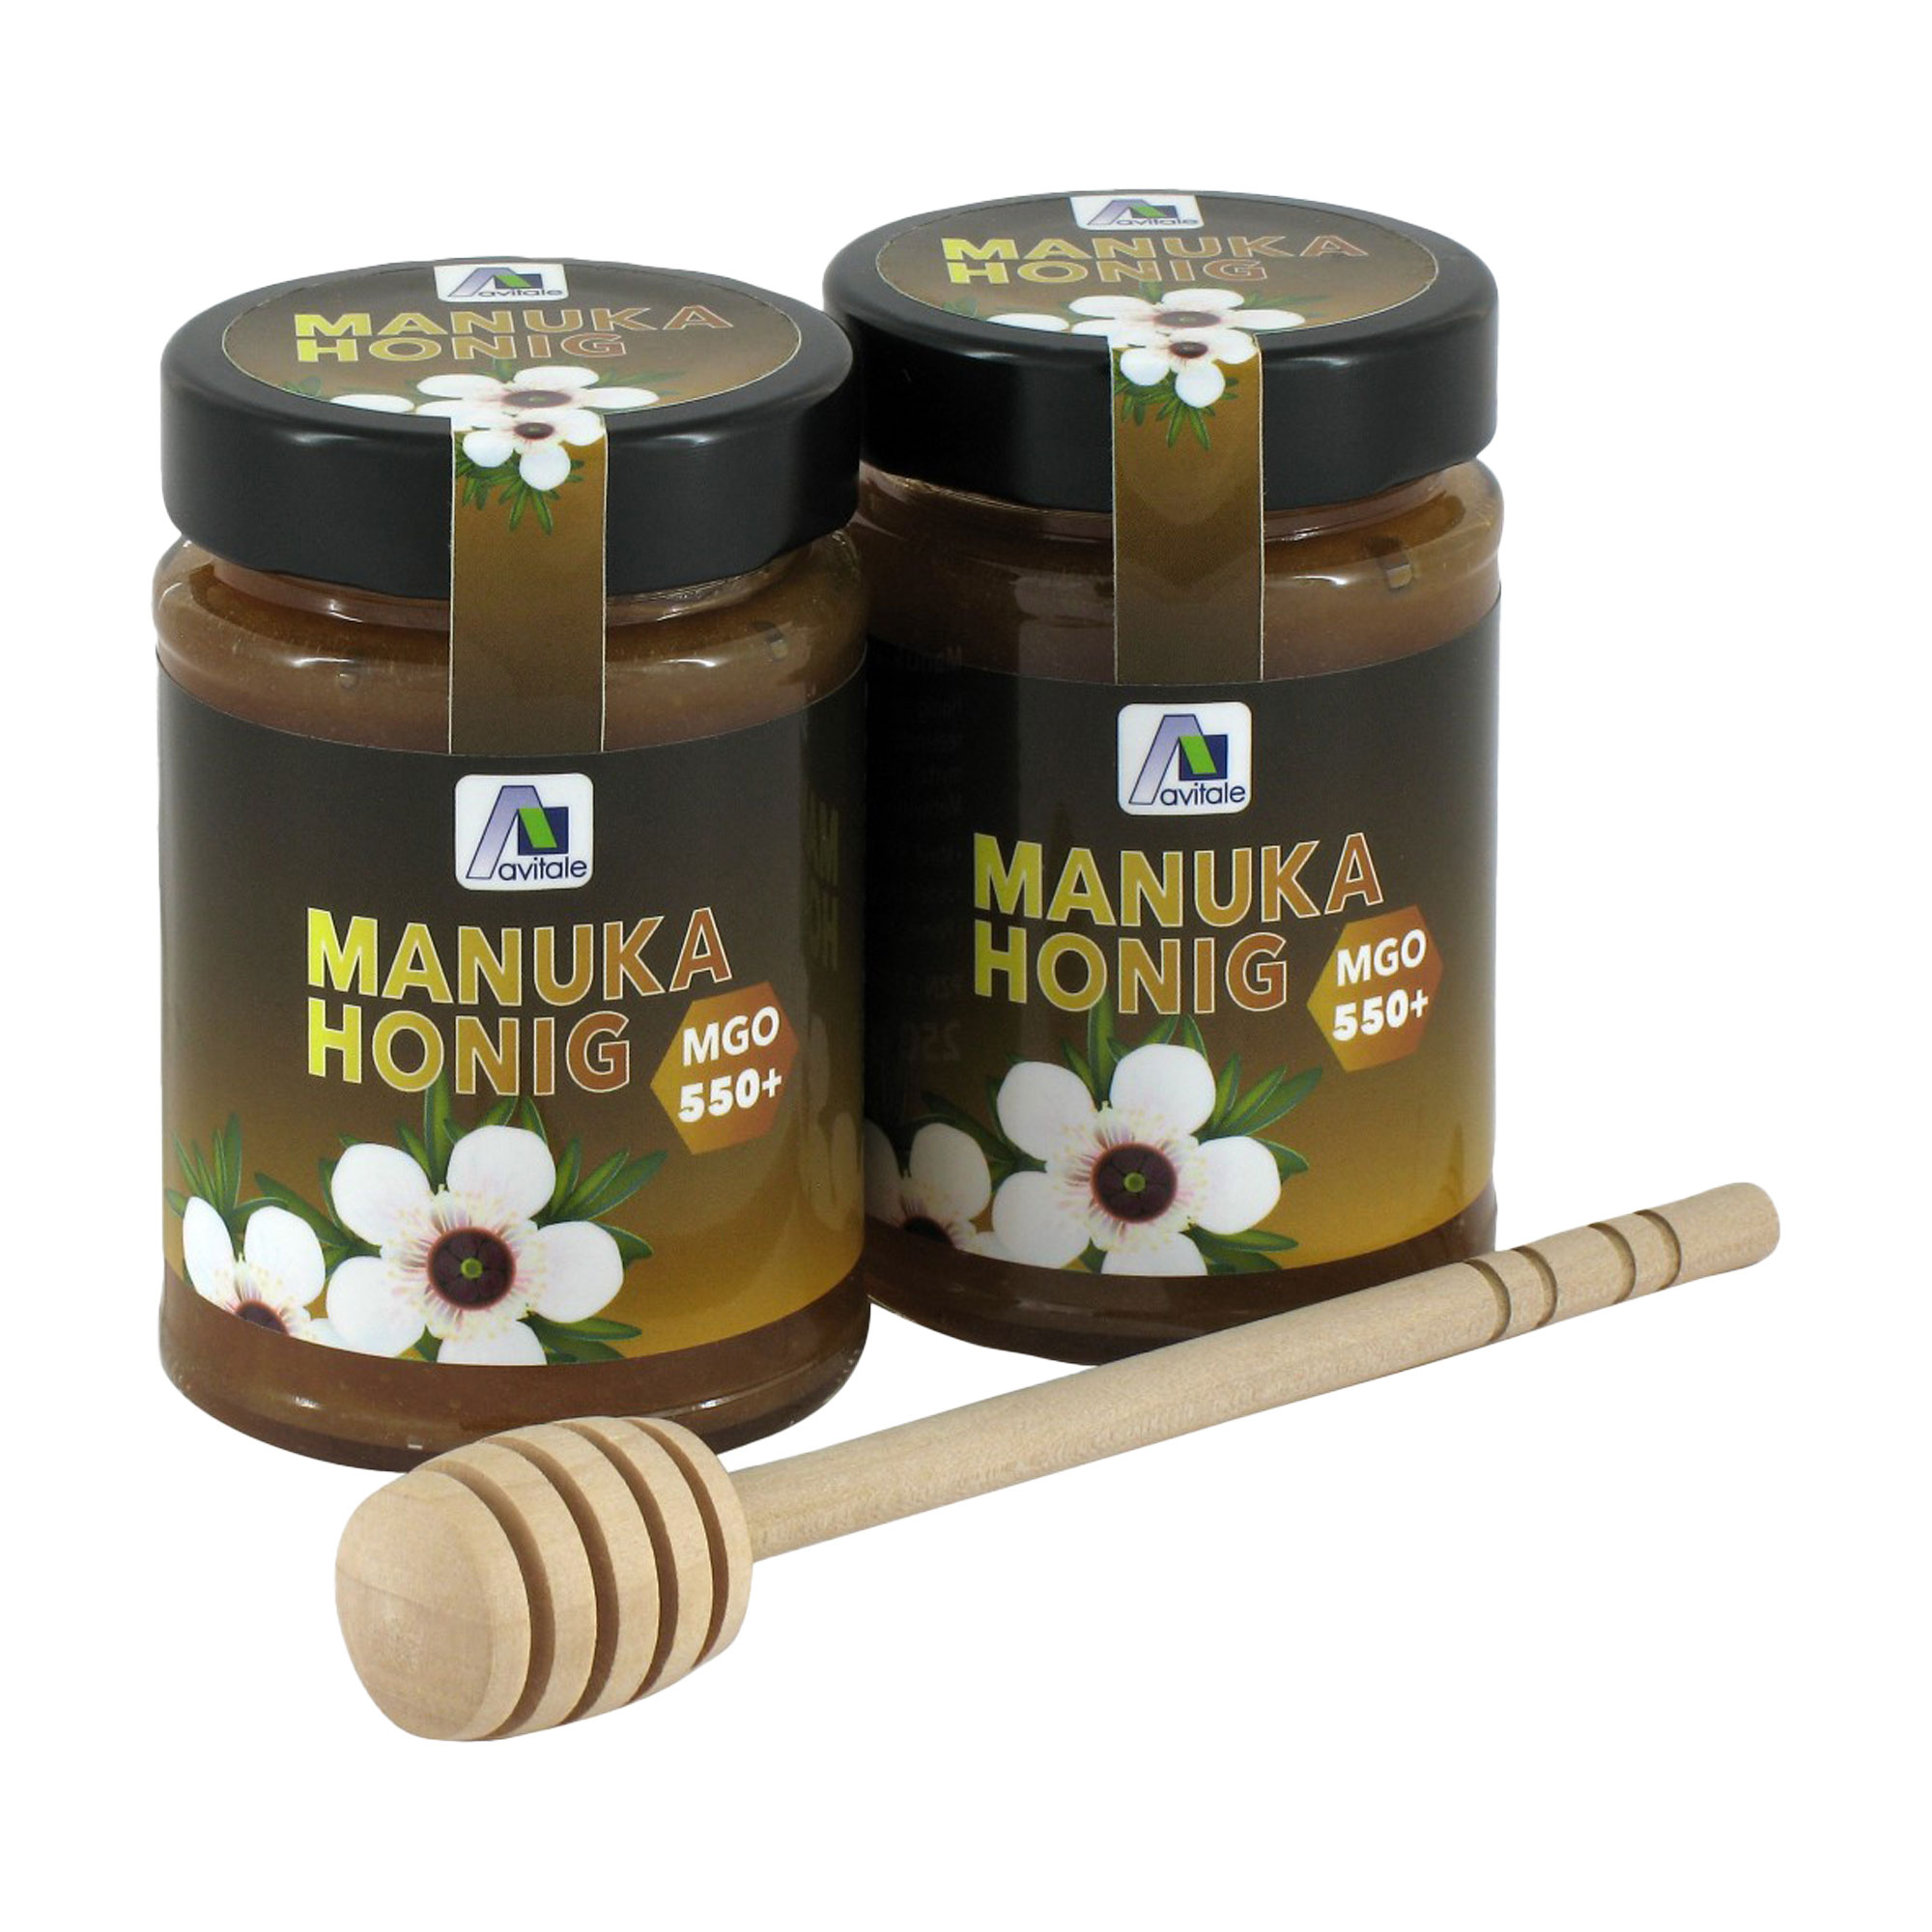 Honig aus Neuseeland mit mindestens 550 mg Methylglyoxal (MGO) pro Kilogramm Honig. Inkl. Honiglöffel.